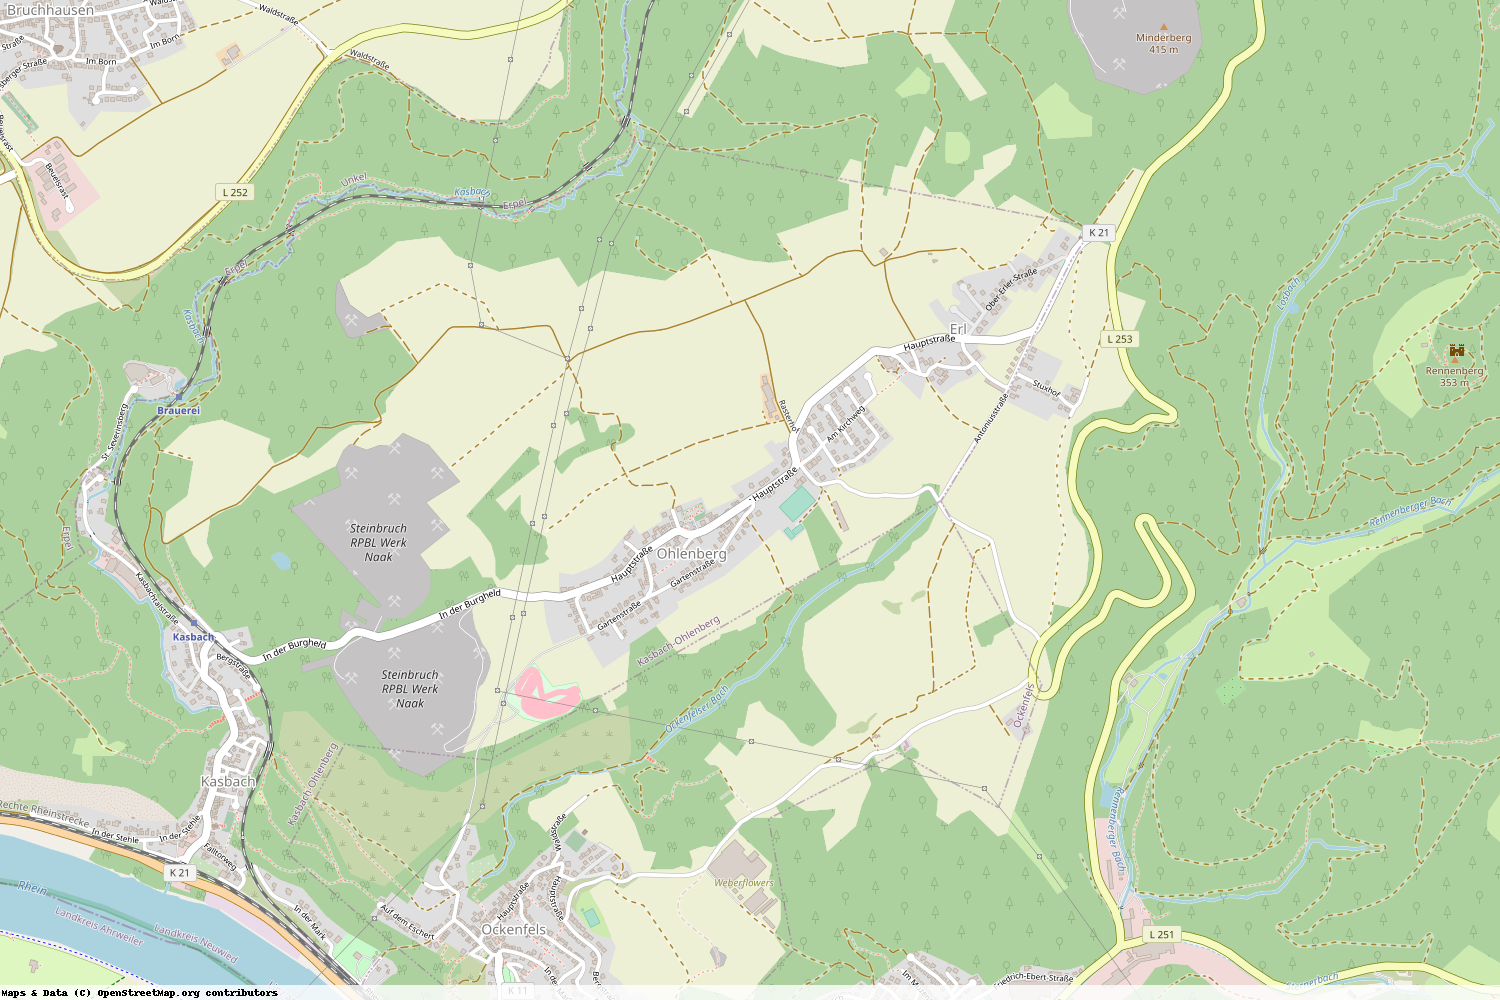 Ist gerade Stromausfall in Rheinland-Pfalz - Neuwied - Kasbach-Ohlenberg?